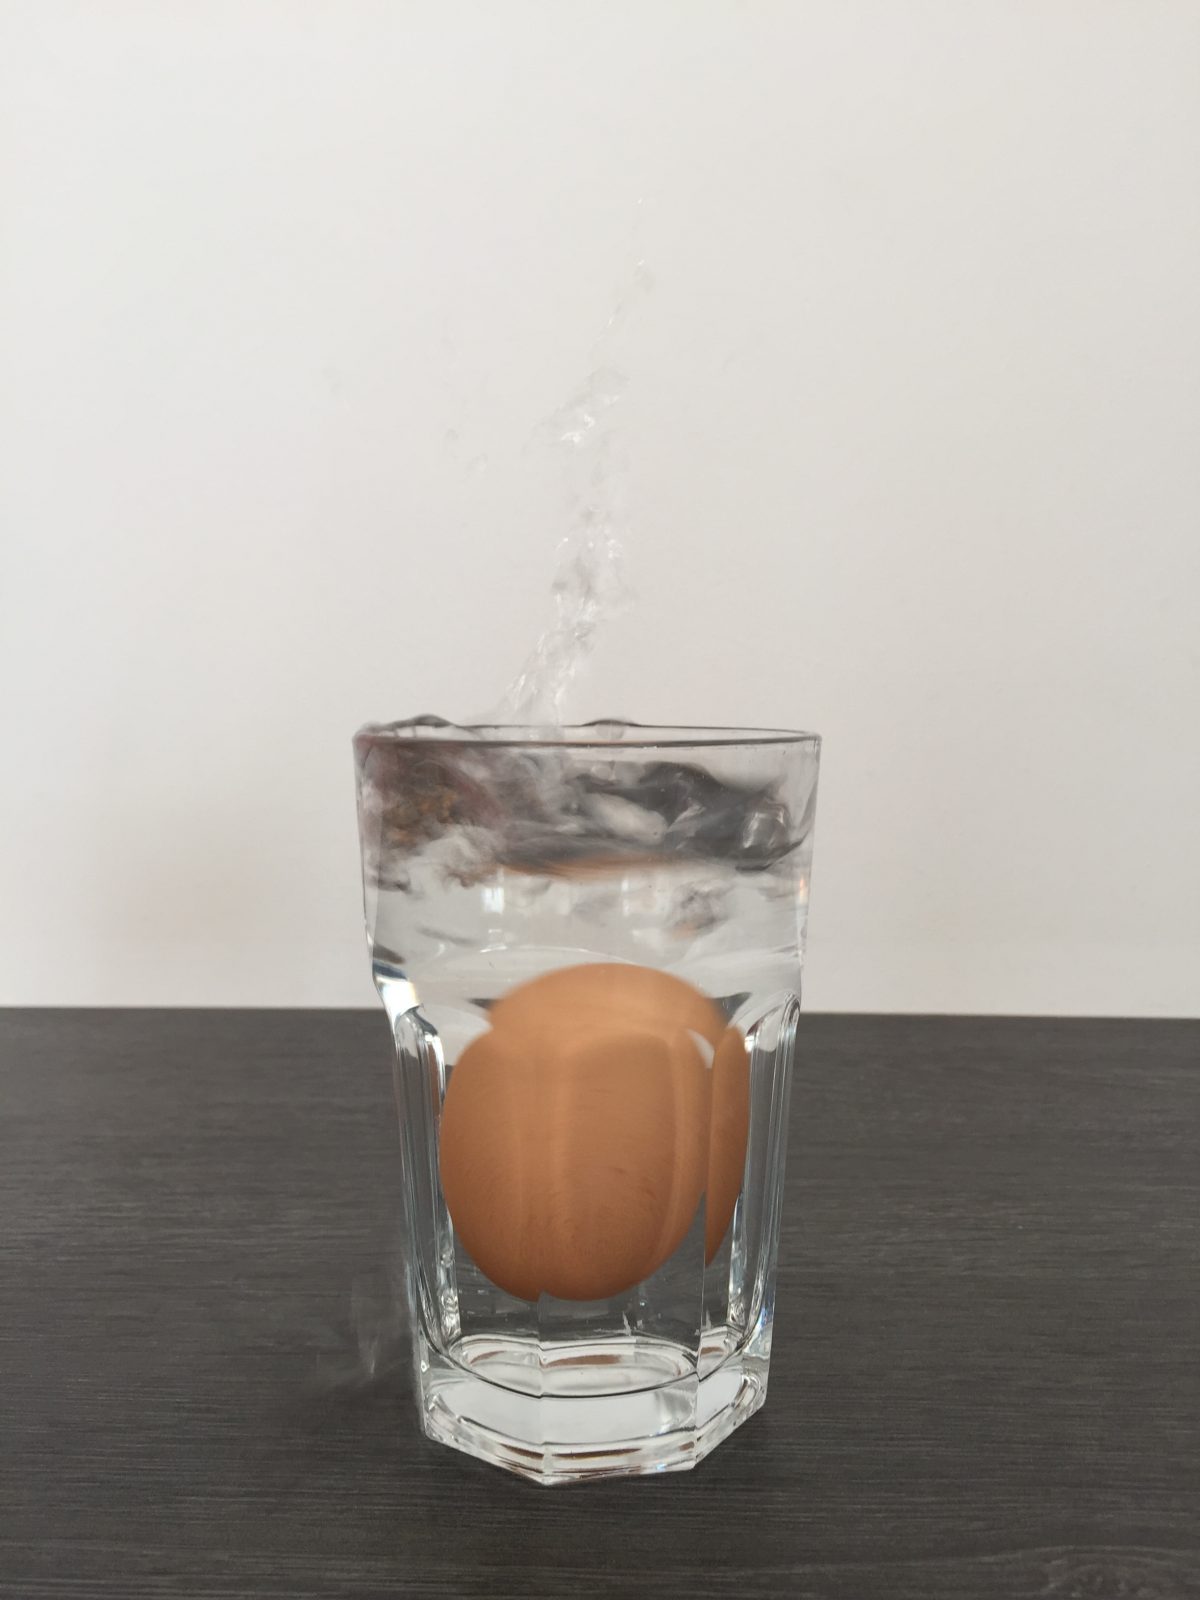 Das „faule“ Ei wird nass